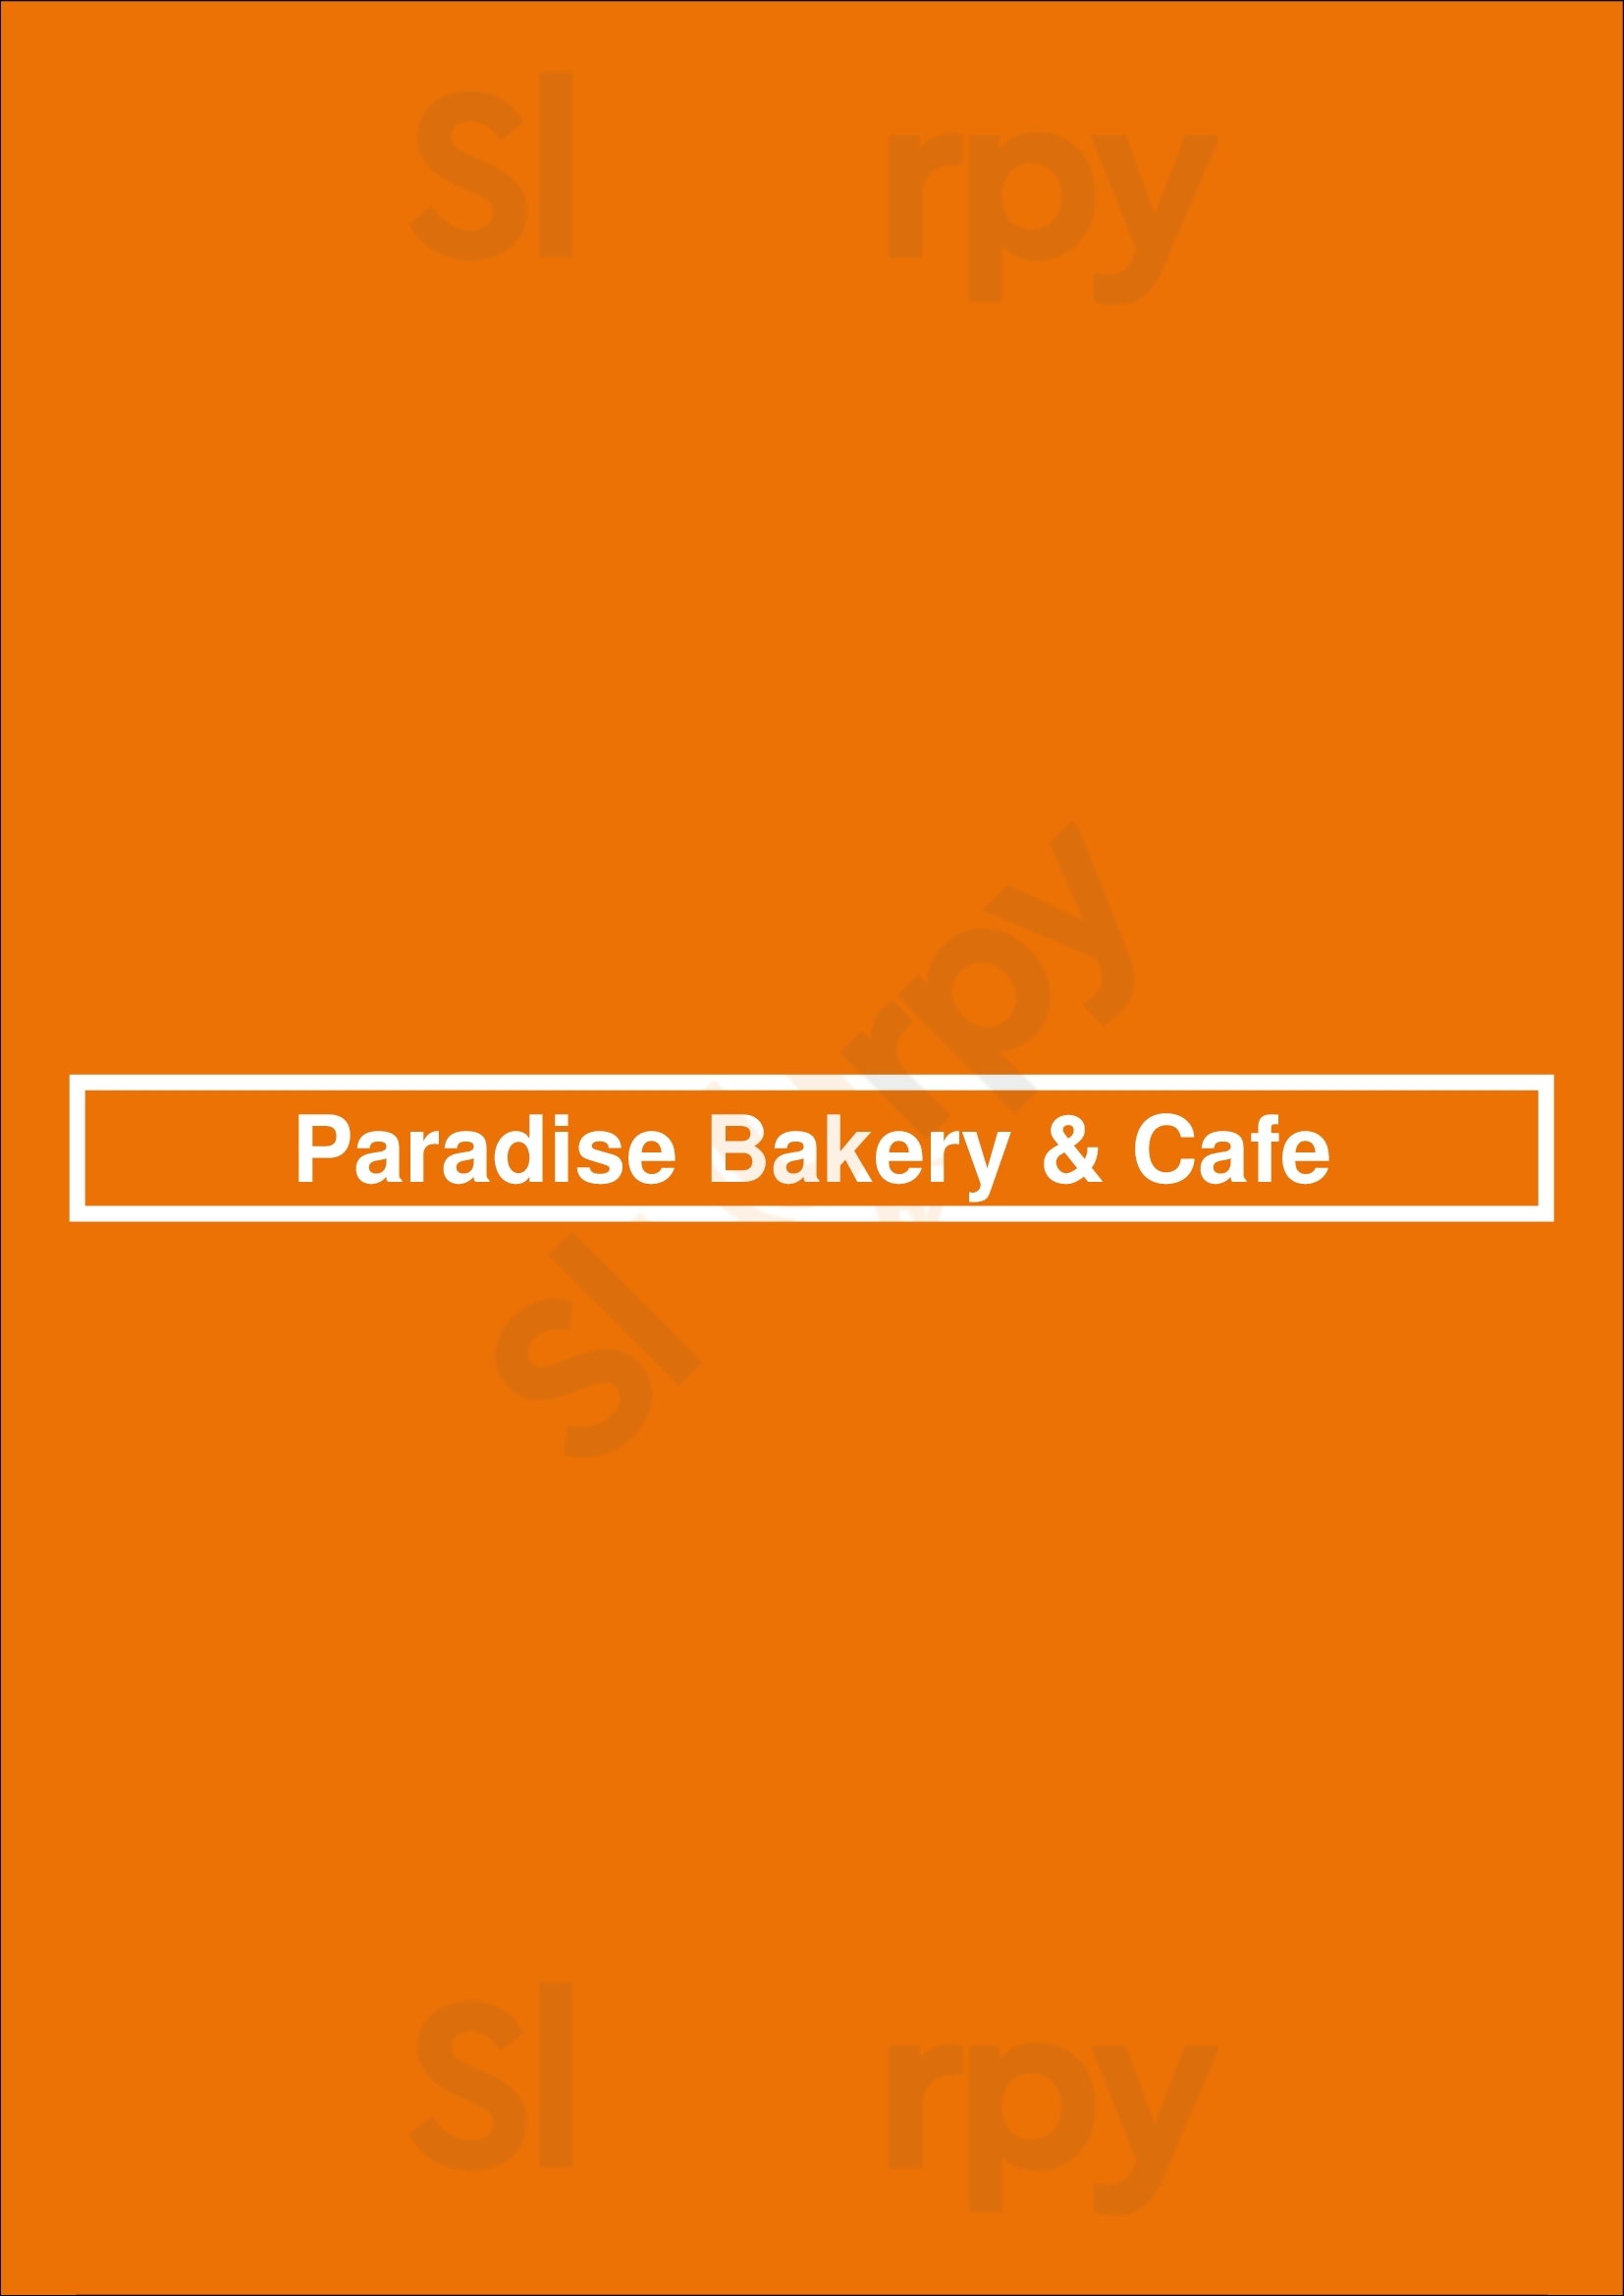 Paradise Bakery & Cafe Omaha Menu - 1